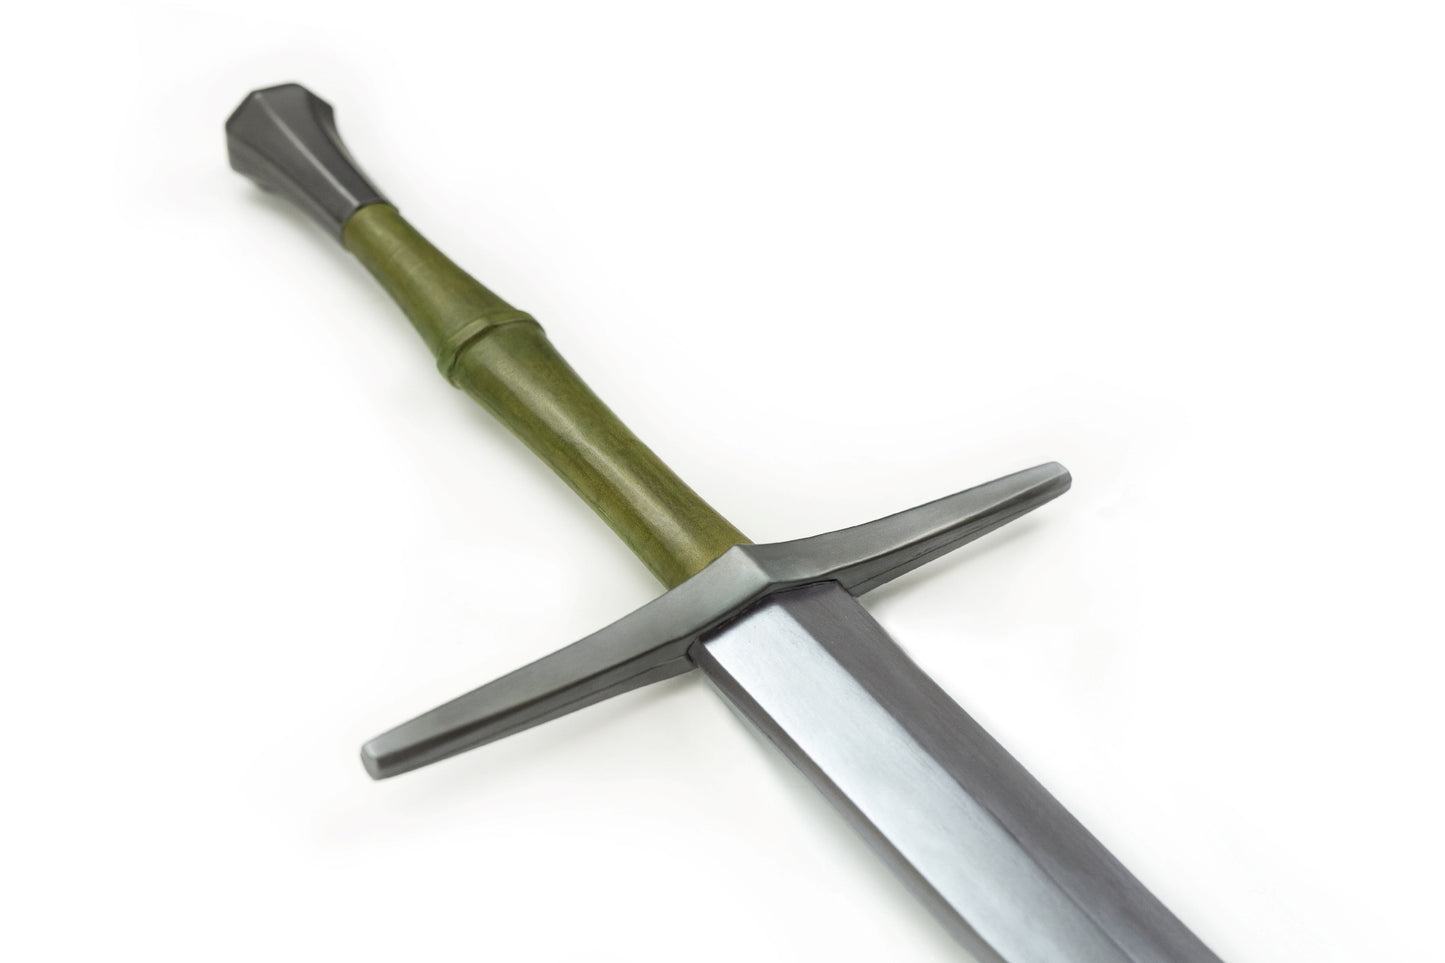 Bastard sword